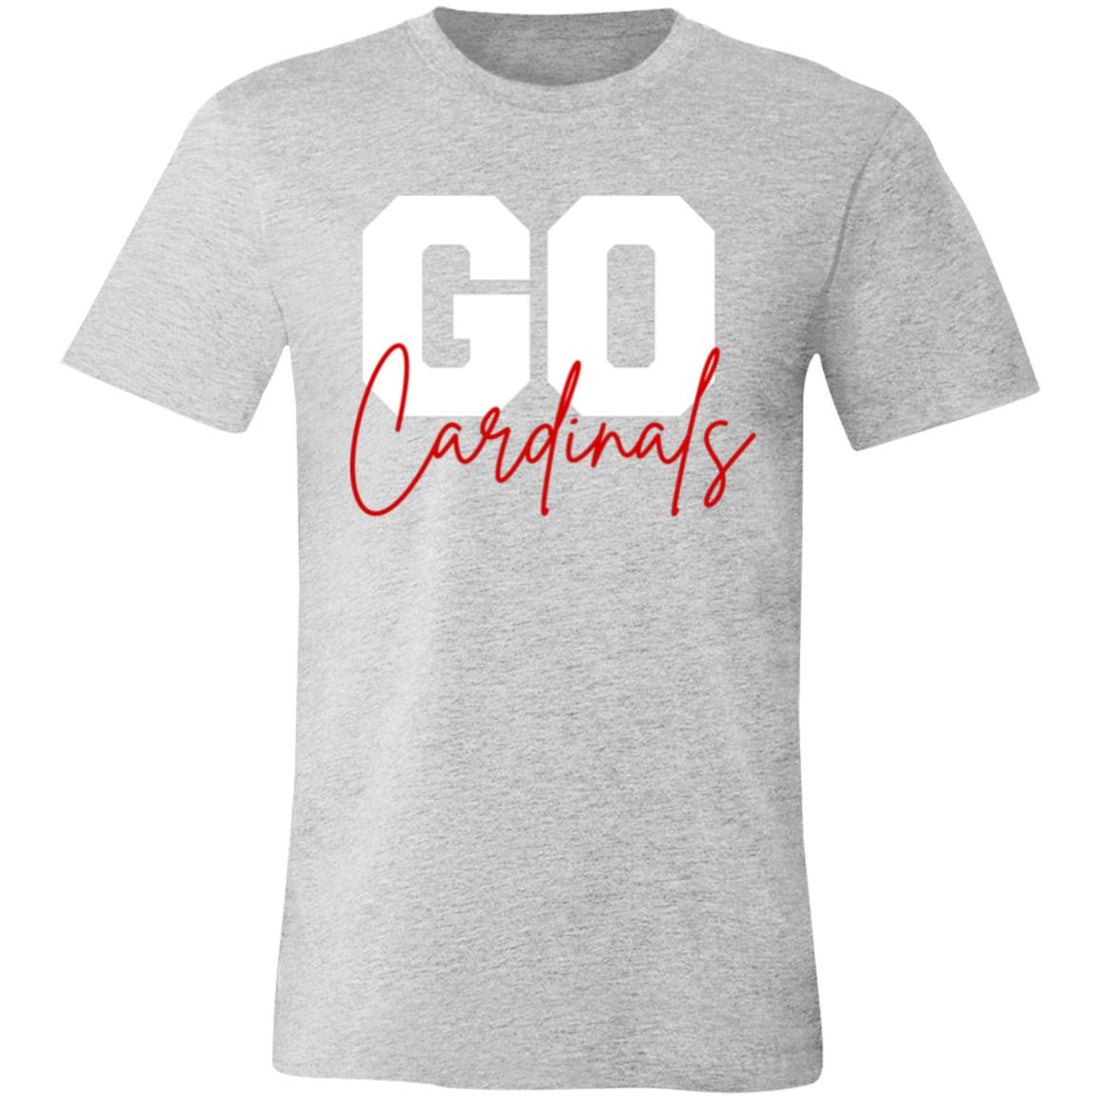 Go Cardinals T-Shirt - T-Shirts - Positively Sassy - Go Cardinals T-Shirt